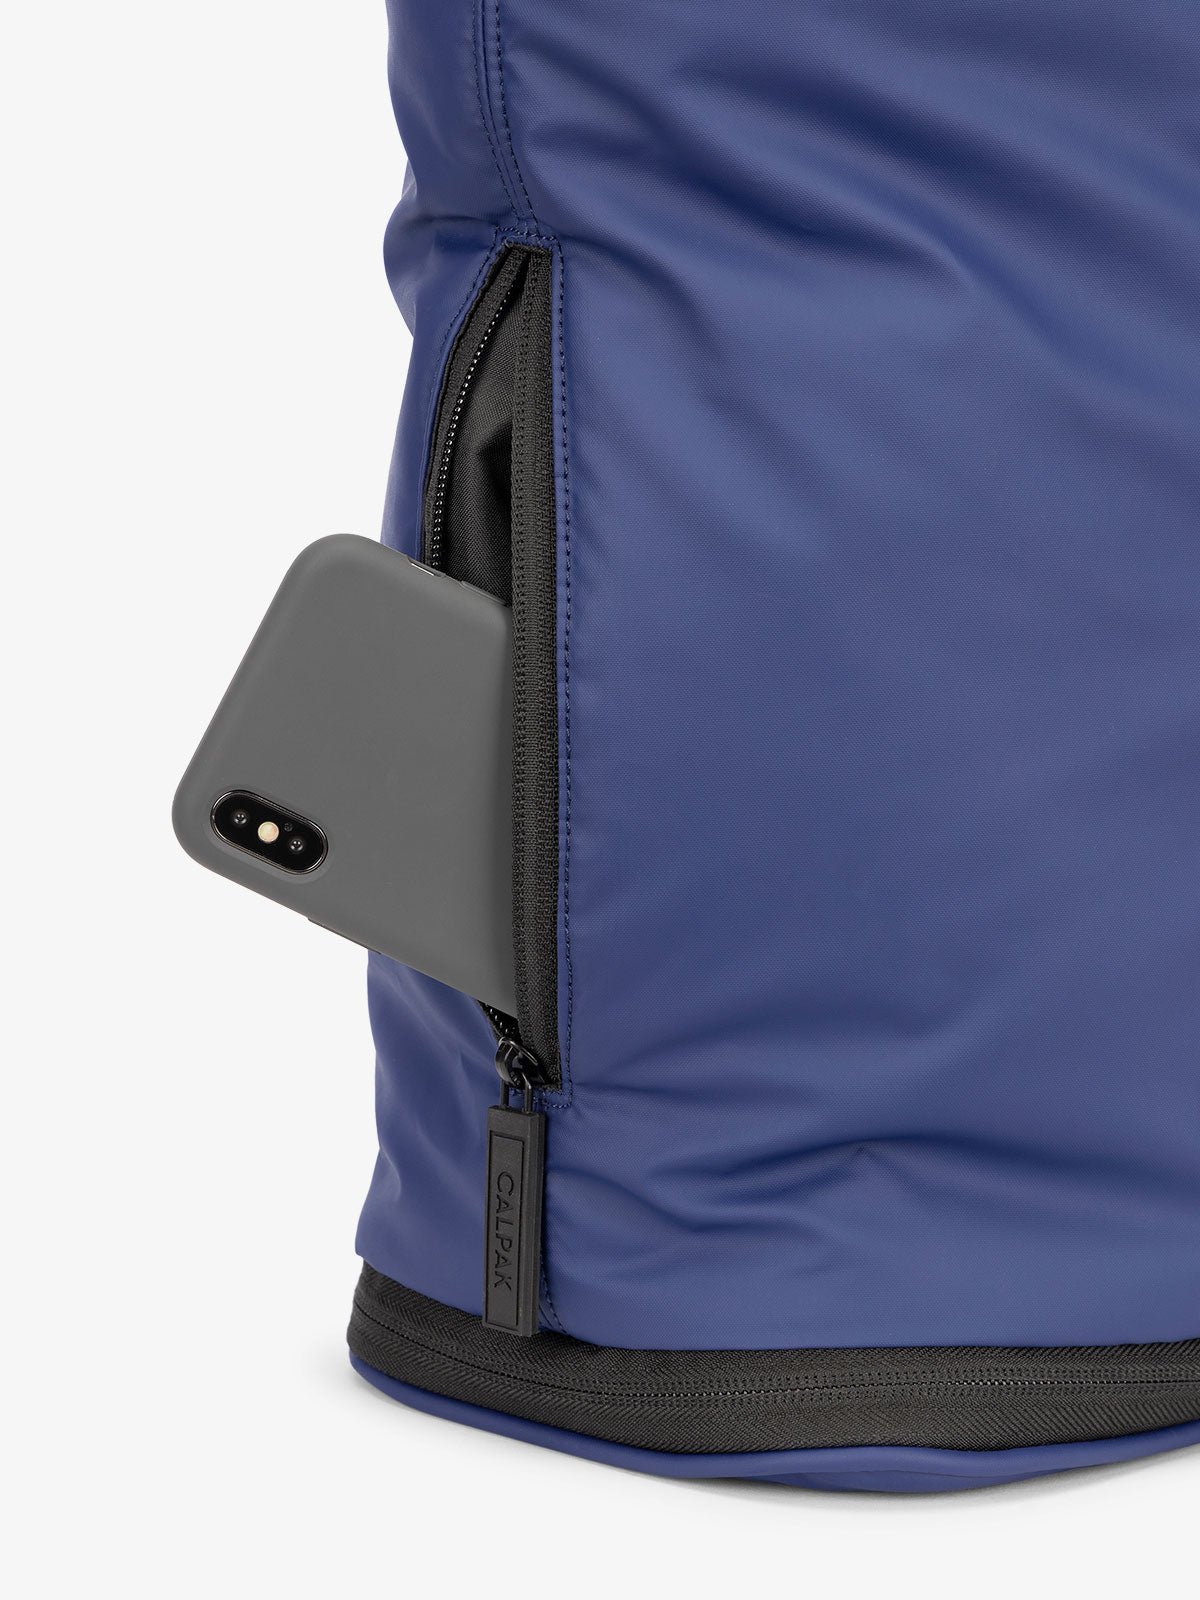 CALPAK Luka expandable laptop bag with hidden zippered pockets in navy blue